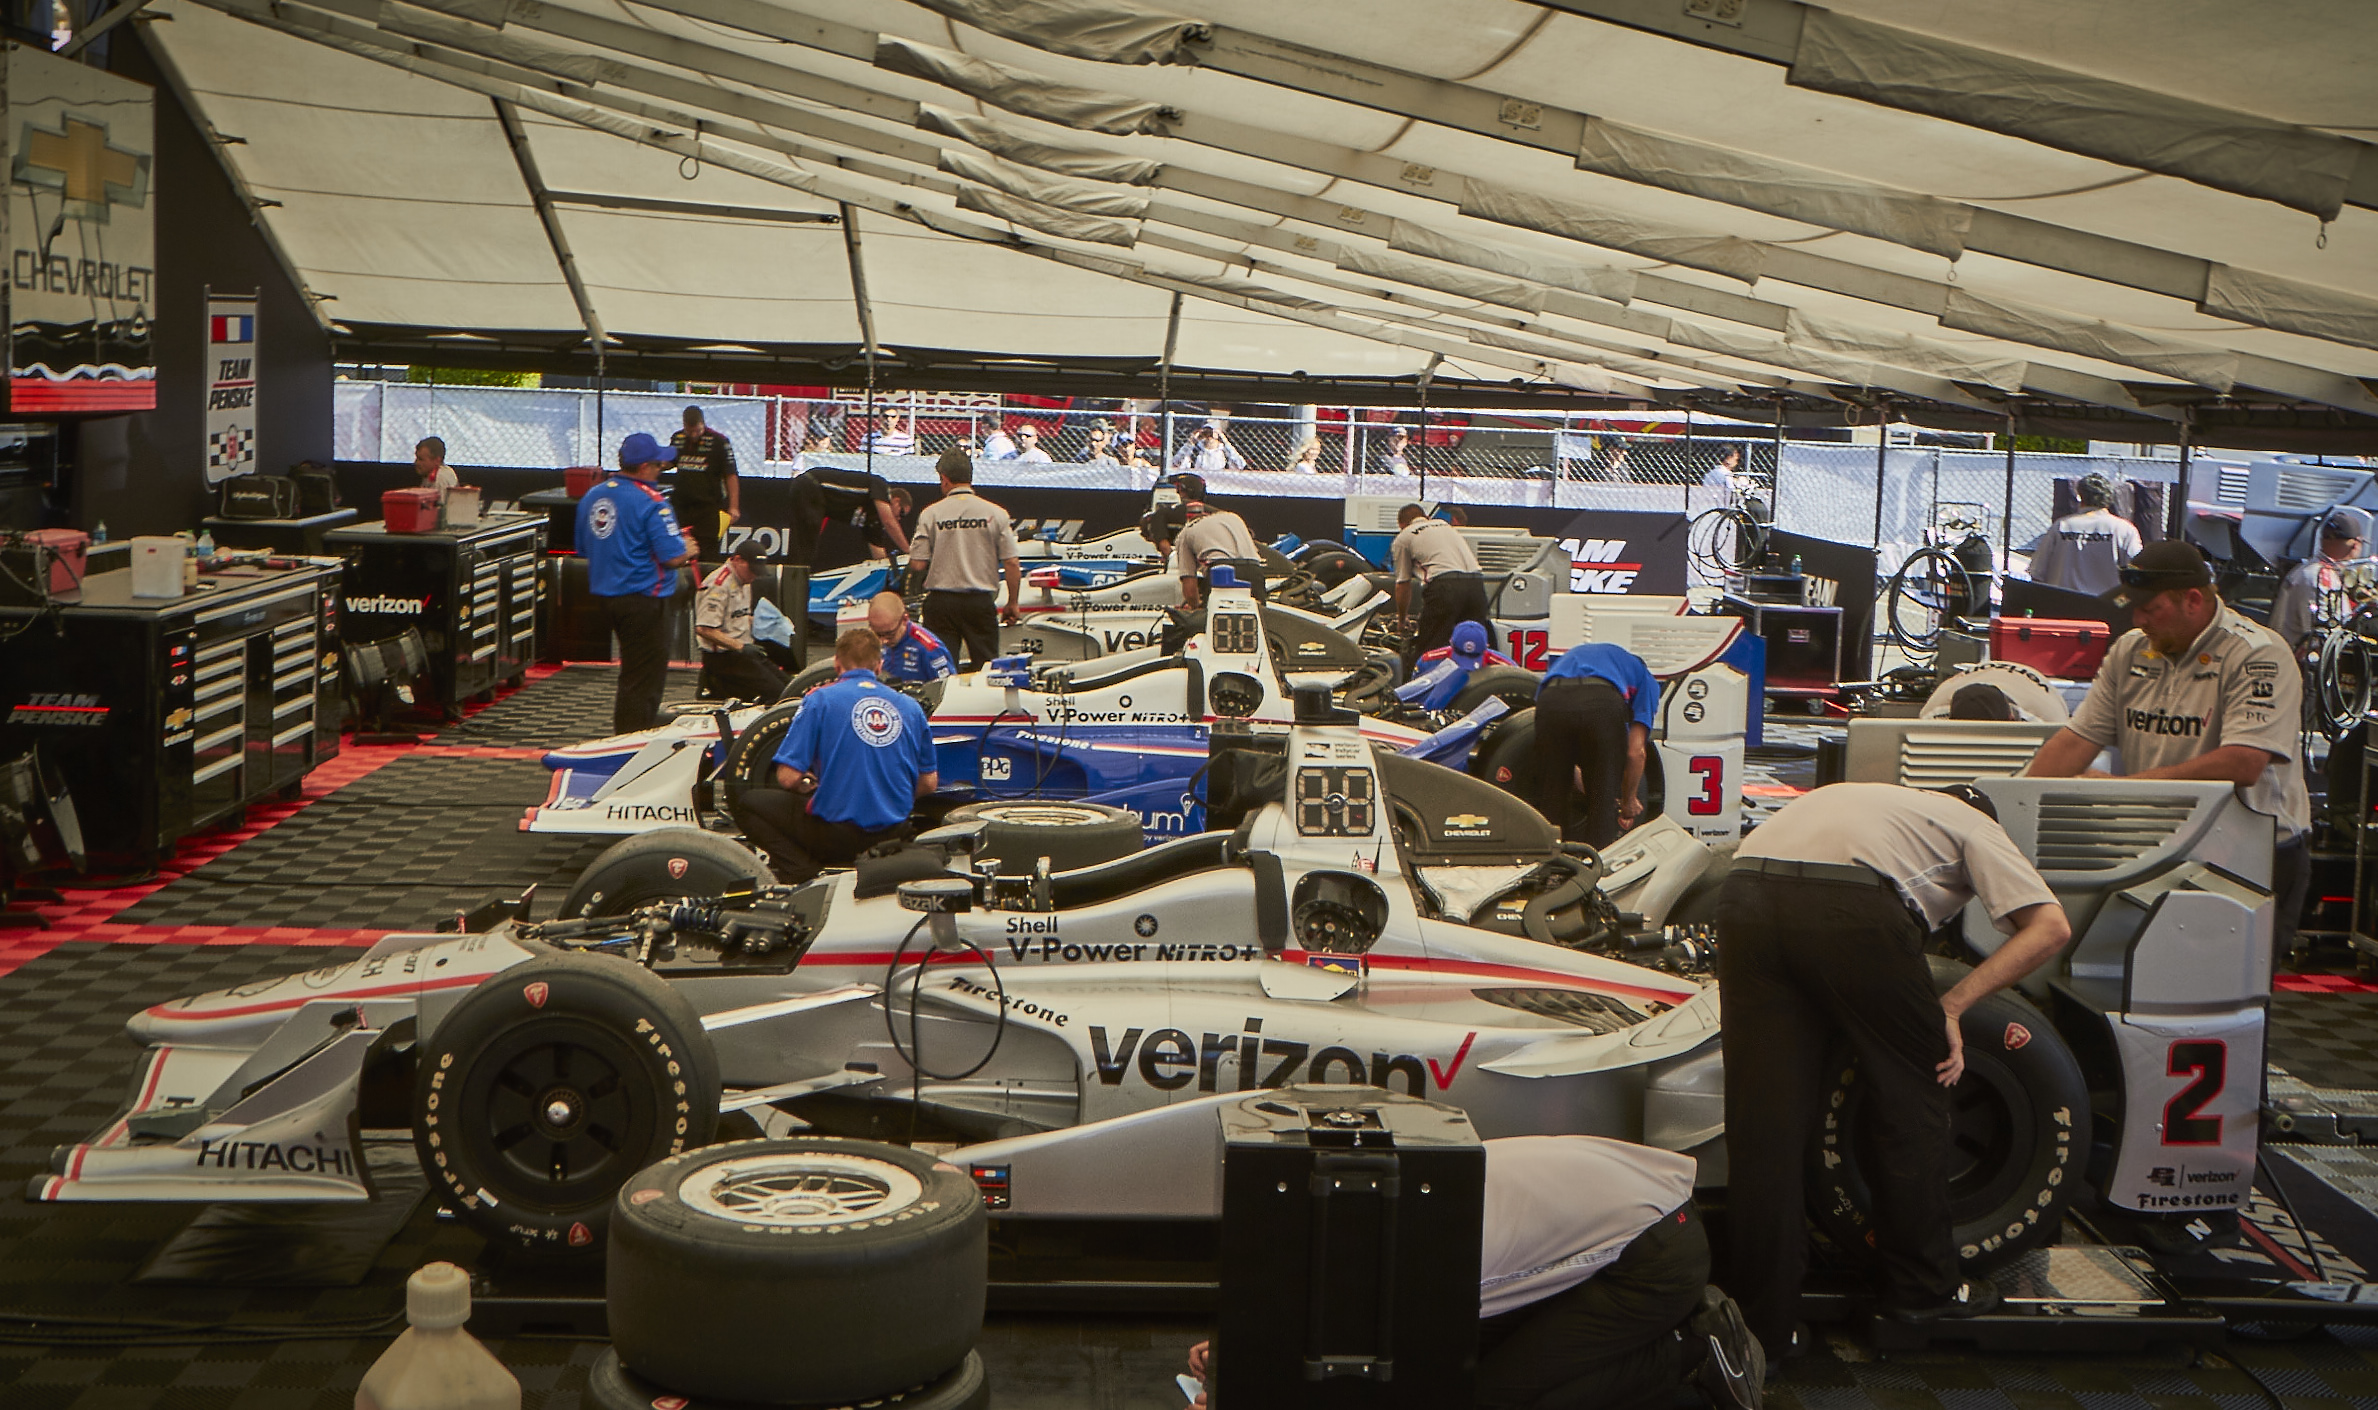 Team Penske engineers and mechanics prepare the cars for The Long Beach Grand Prix” photo credit: Paul Biedrzycki